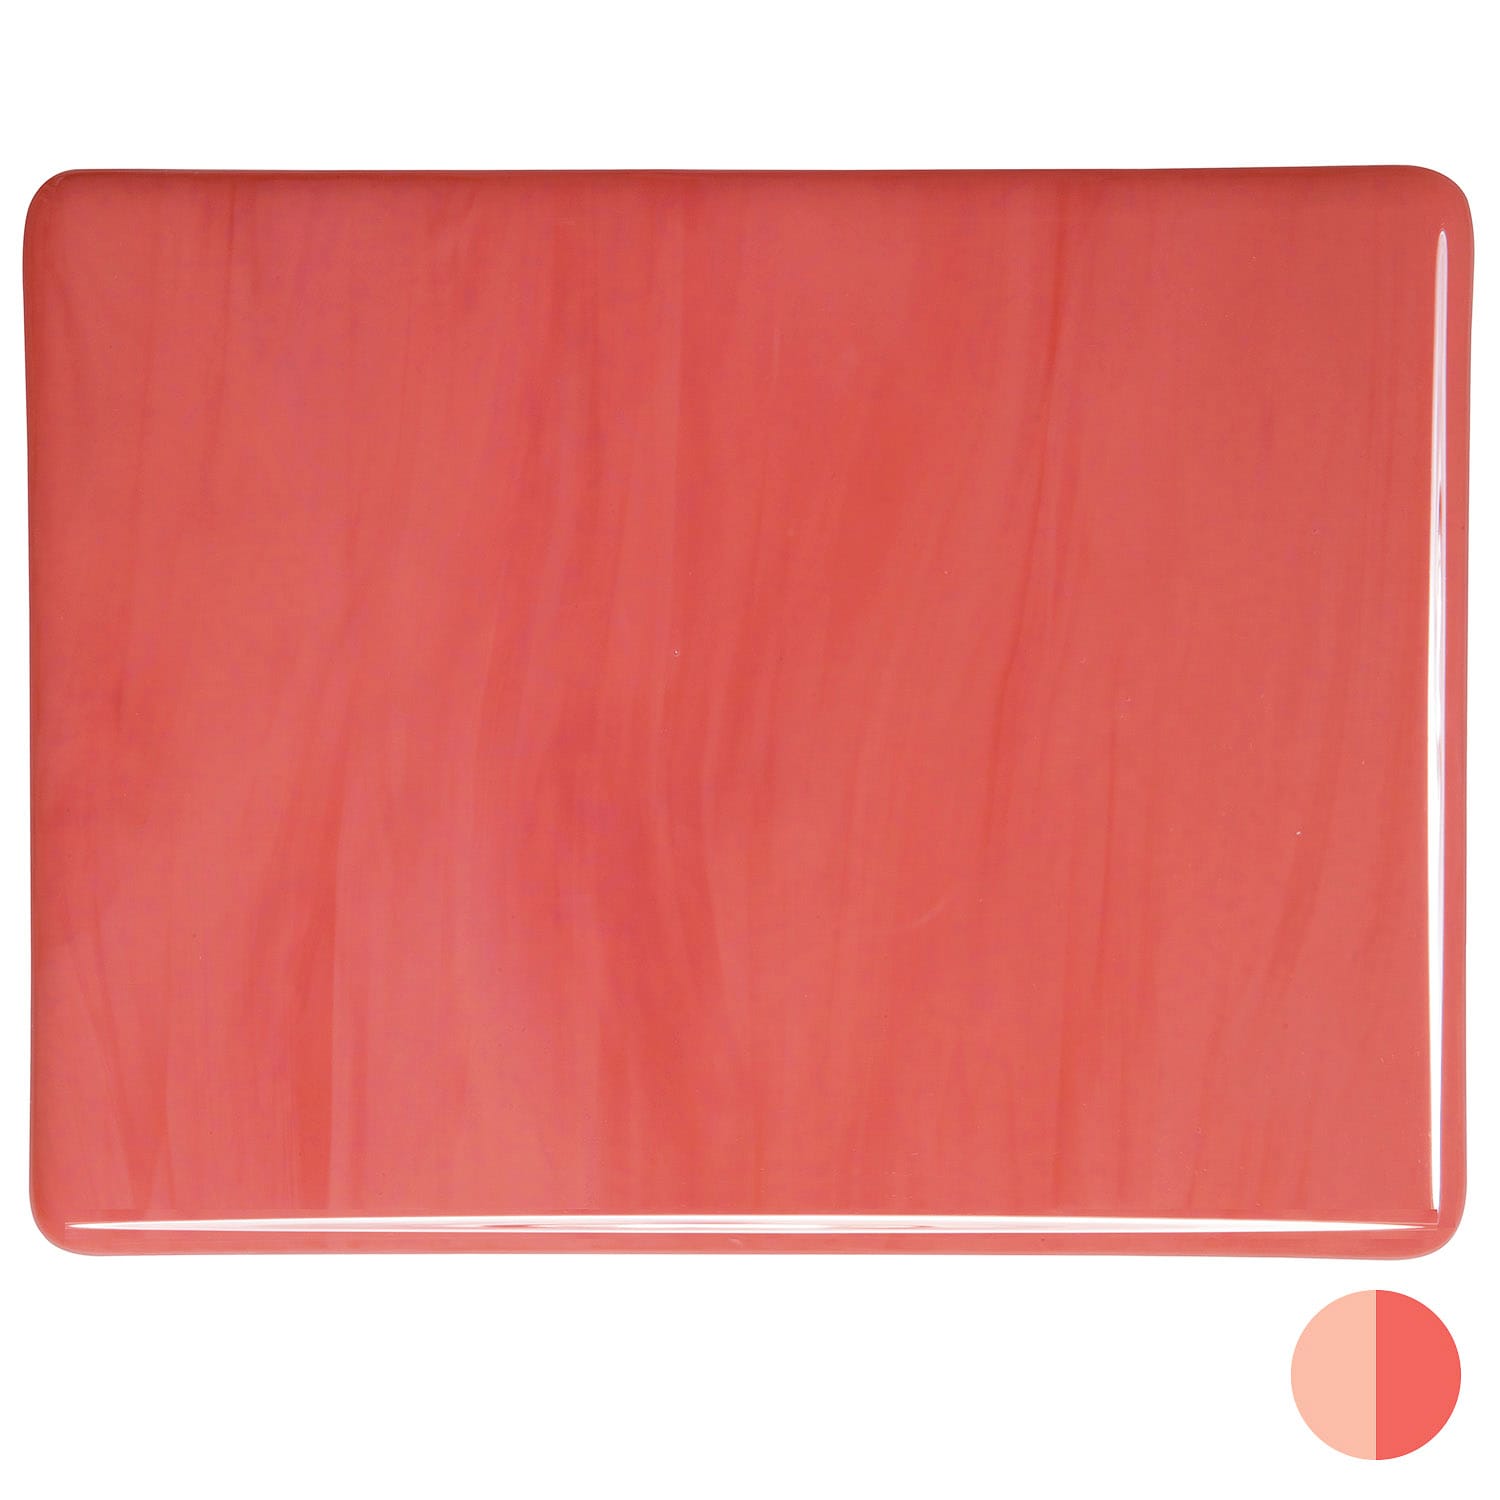 Bullseye COE90 Fusing Glass 000305 Salmon Pink Half Sheet